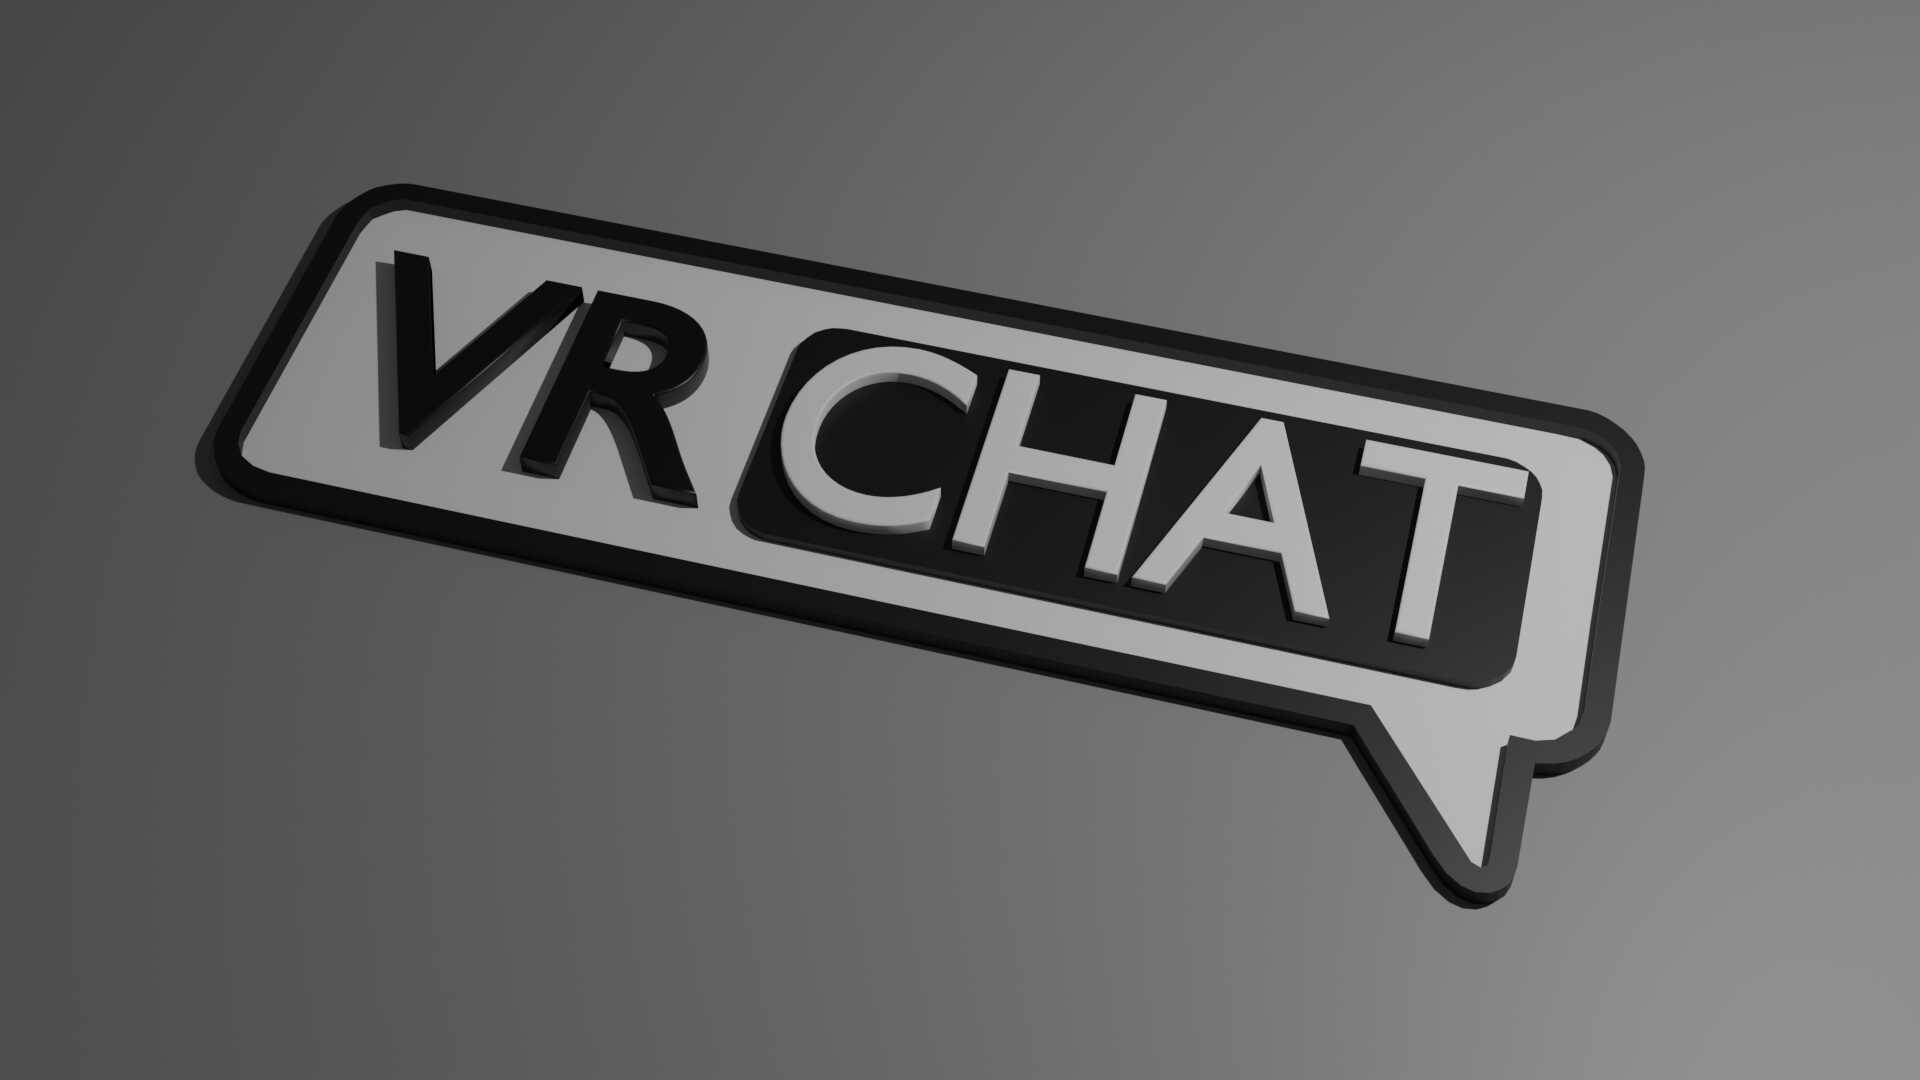 Monochrome Vrchat Logo Background